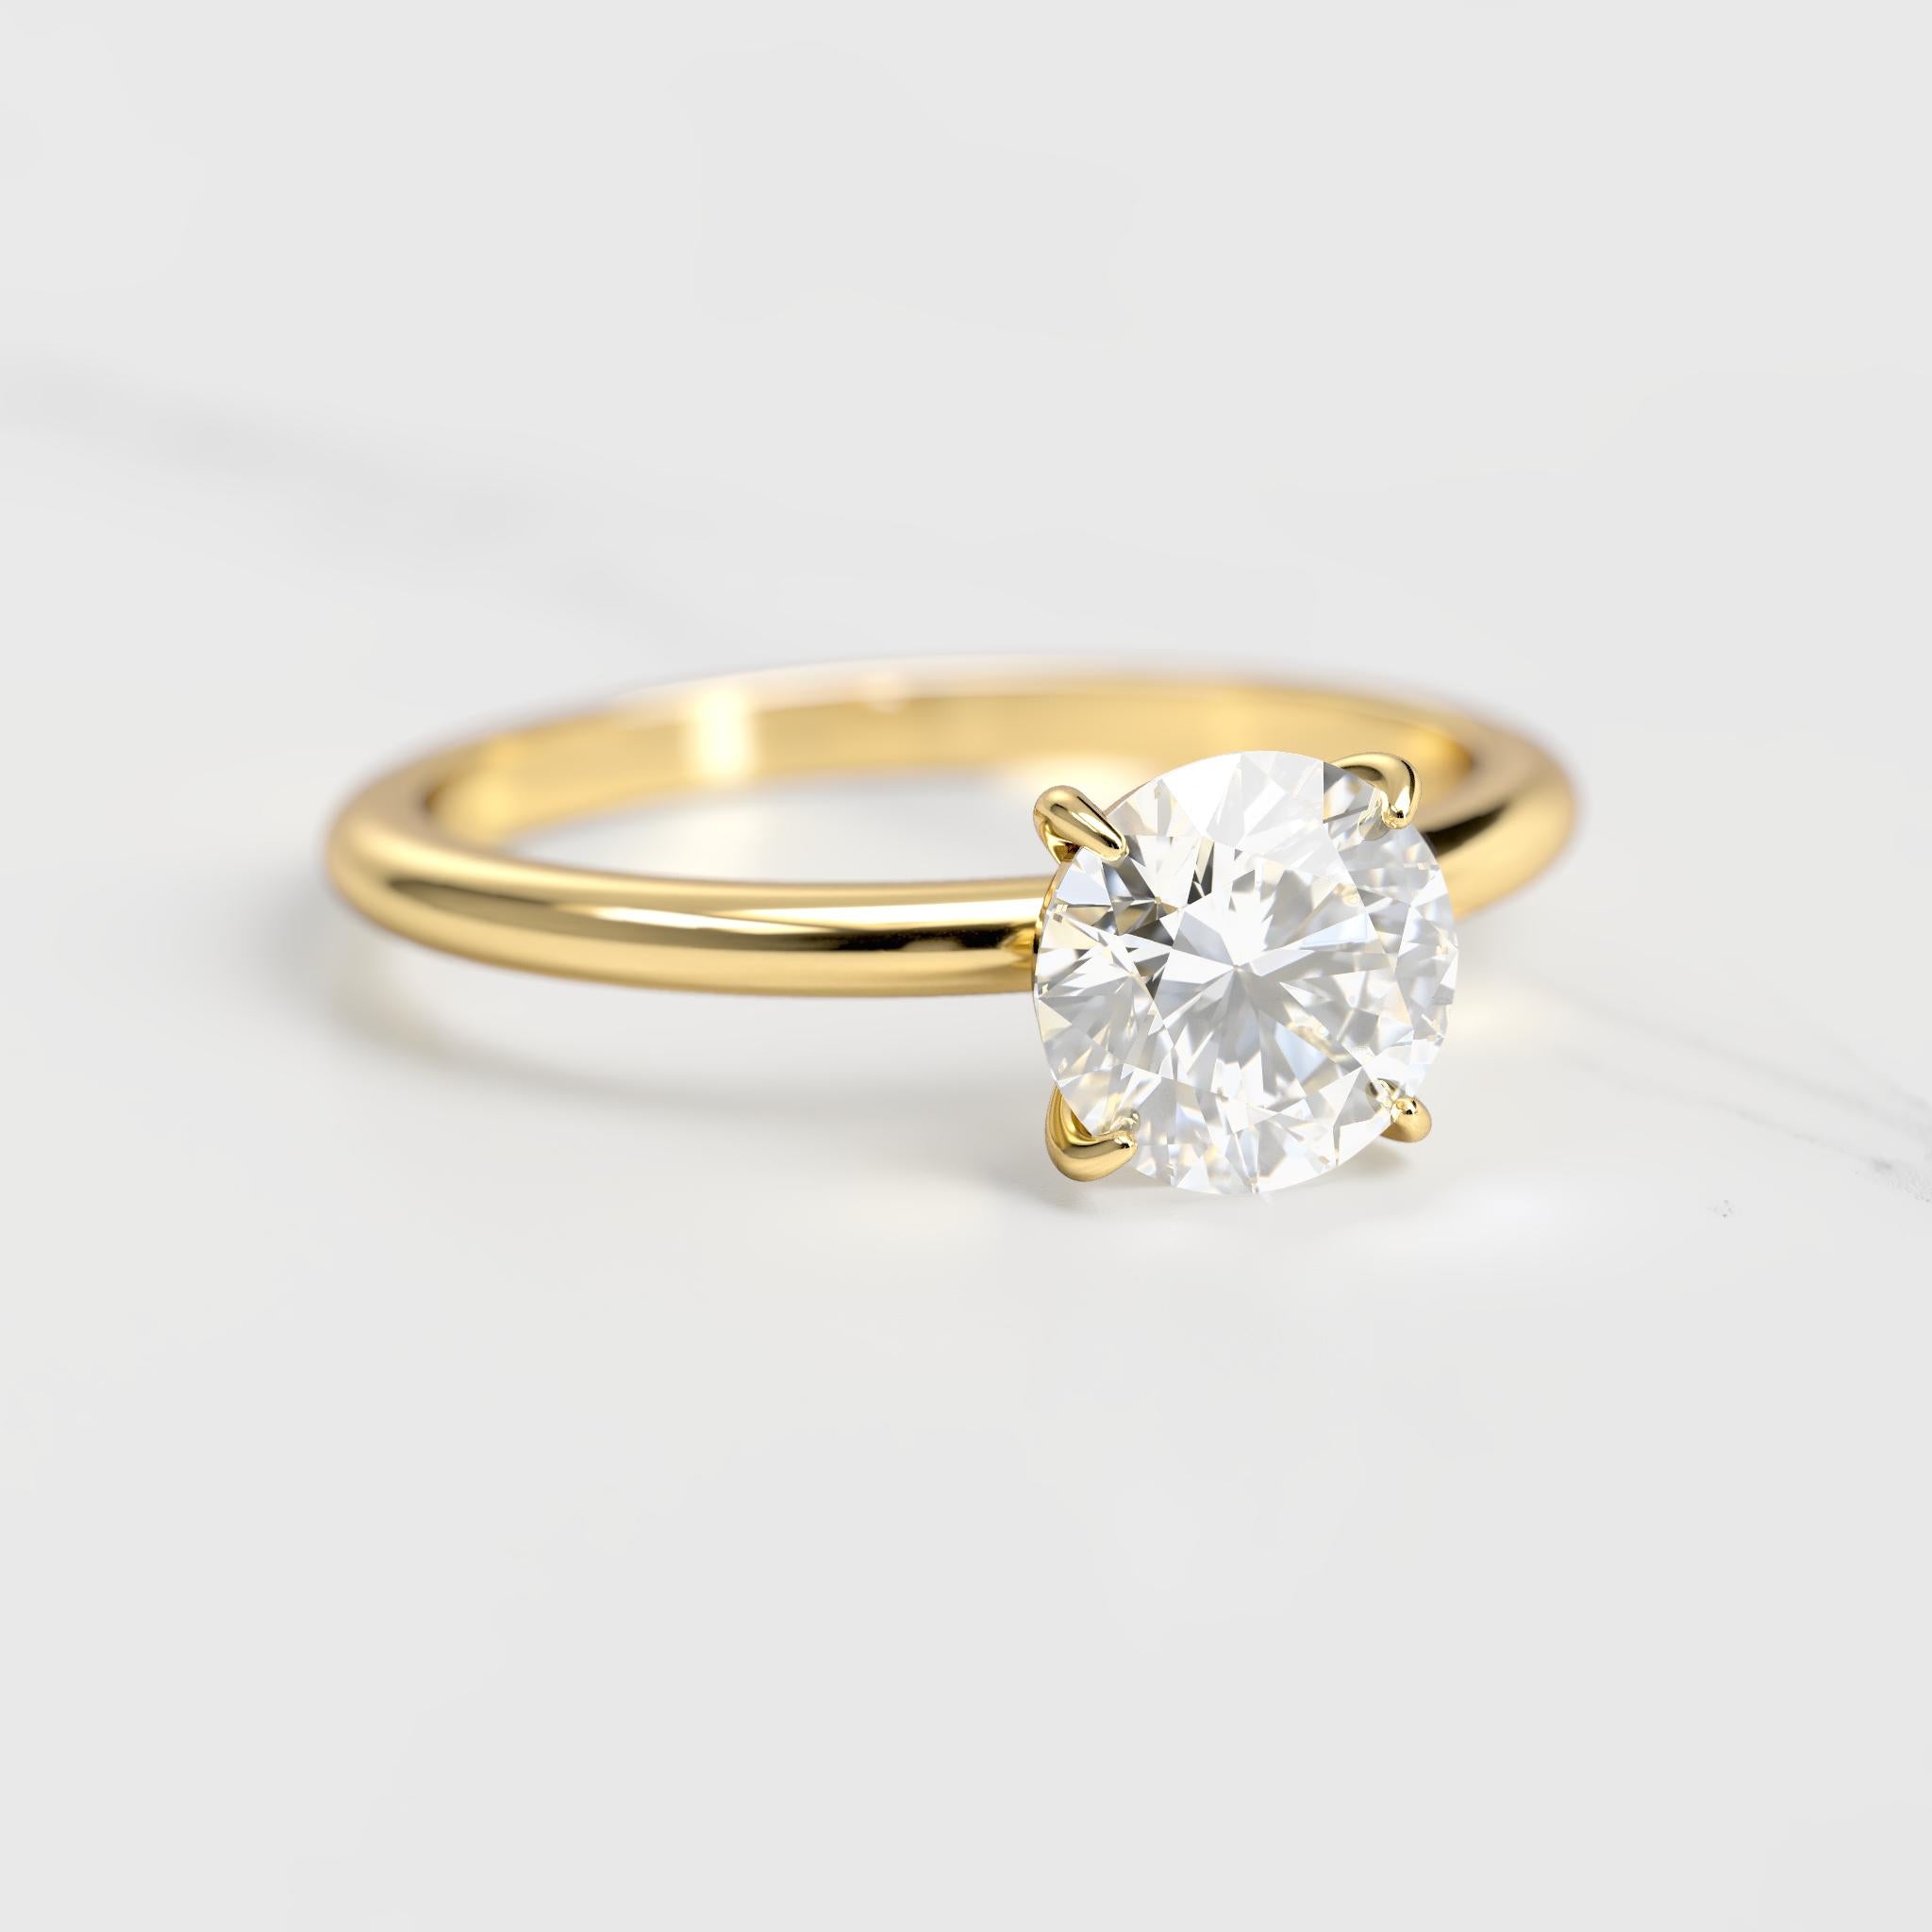 Round Tapered Solitaire Diamond Ring - 18k rose gold / 1.25ct / lab diamond